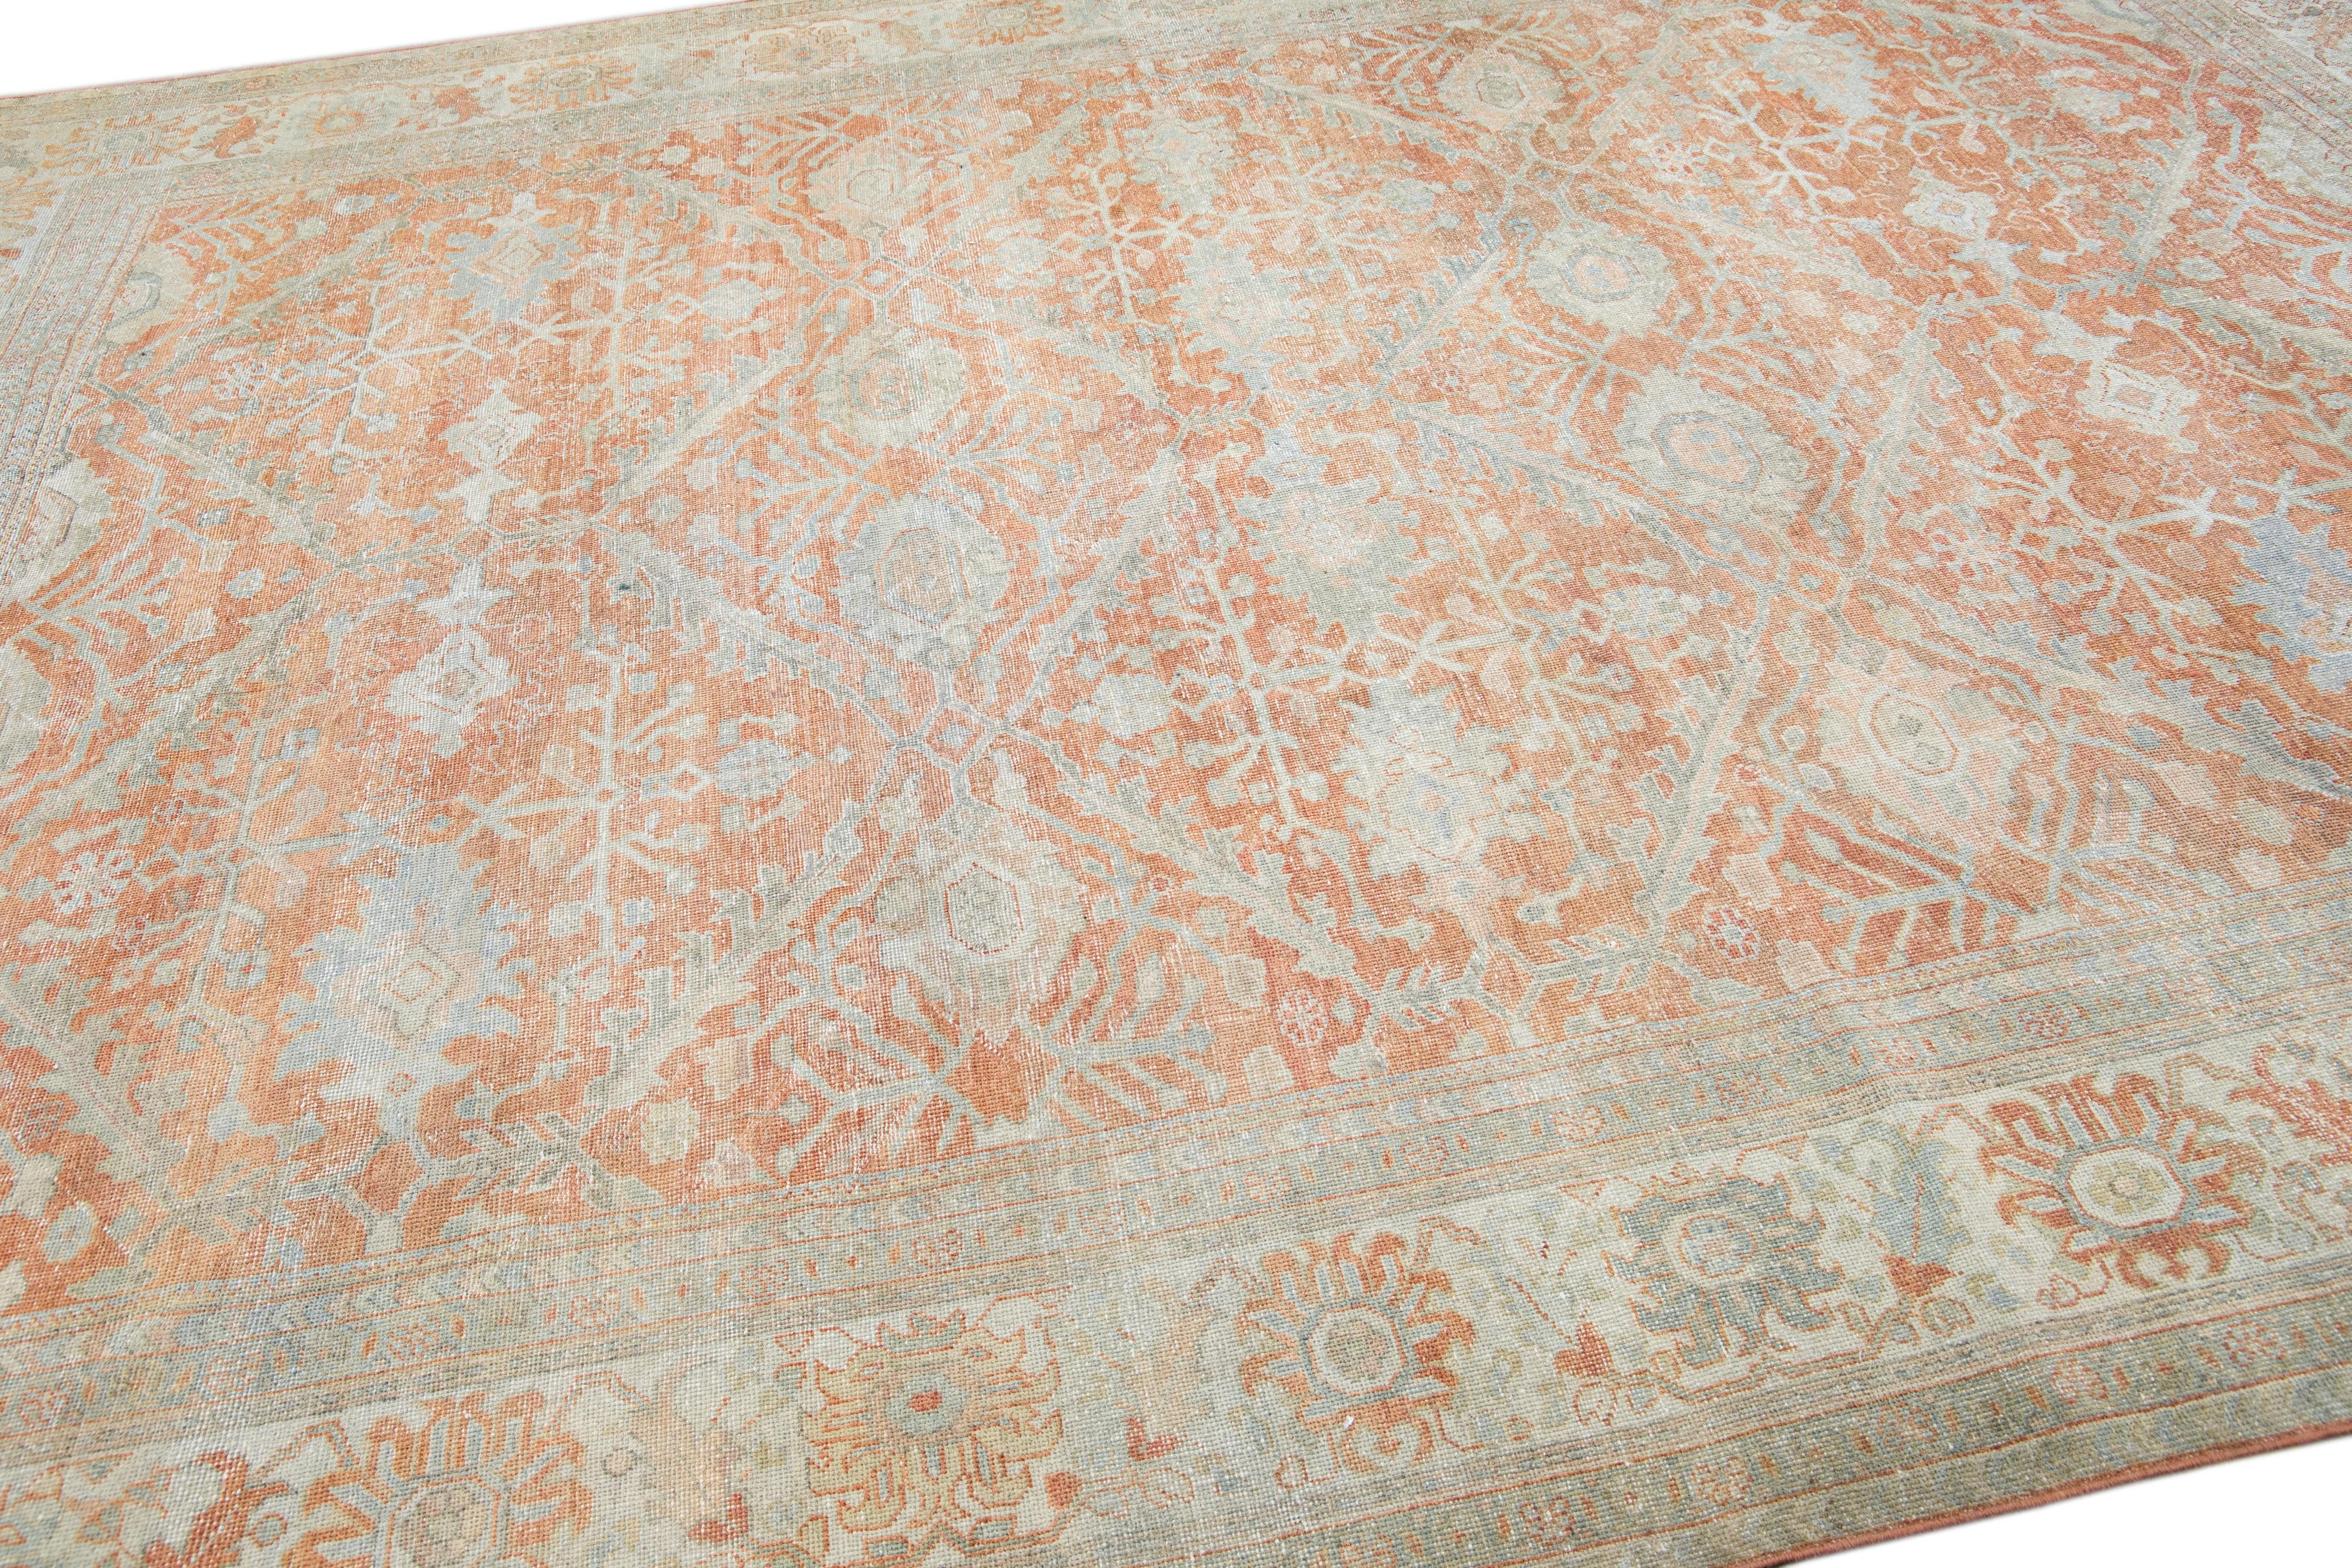 Antique Sultanabad Handmade Floral Pattern Orange Wool Rug For Sale 1